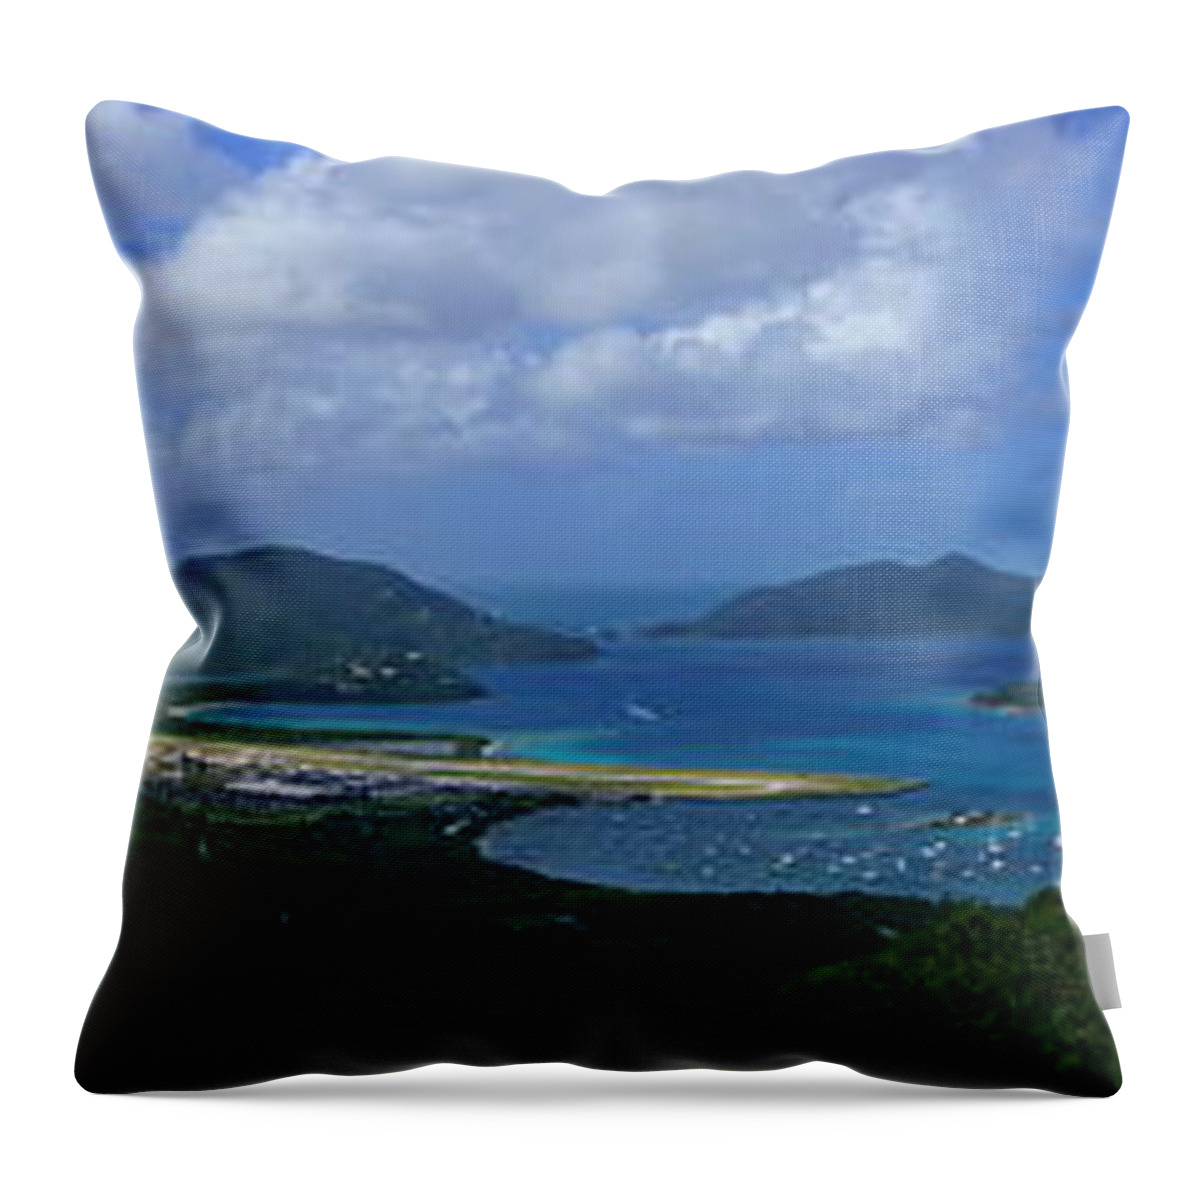 Bvi Throw Pillow featuring the photograph British Virgin Islands by Amanda Jones